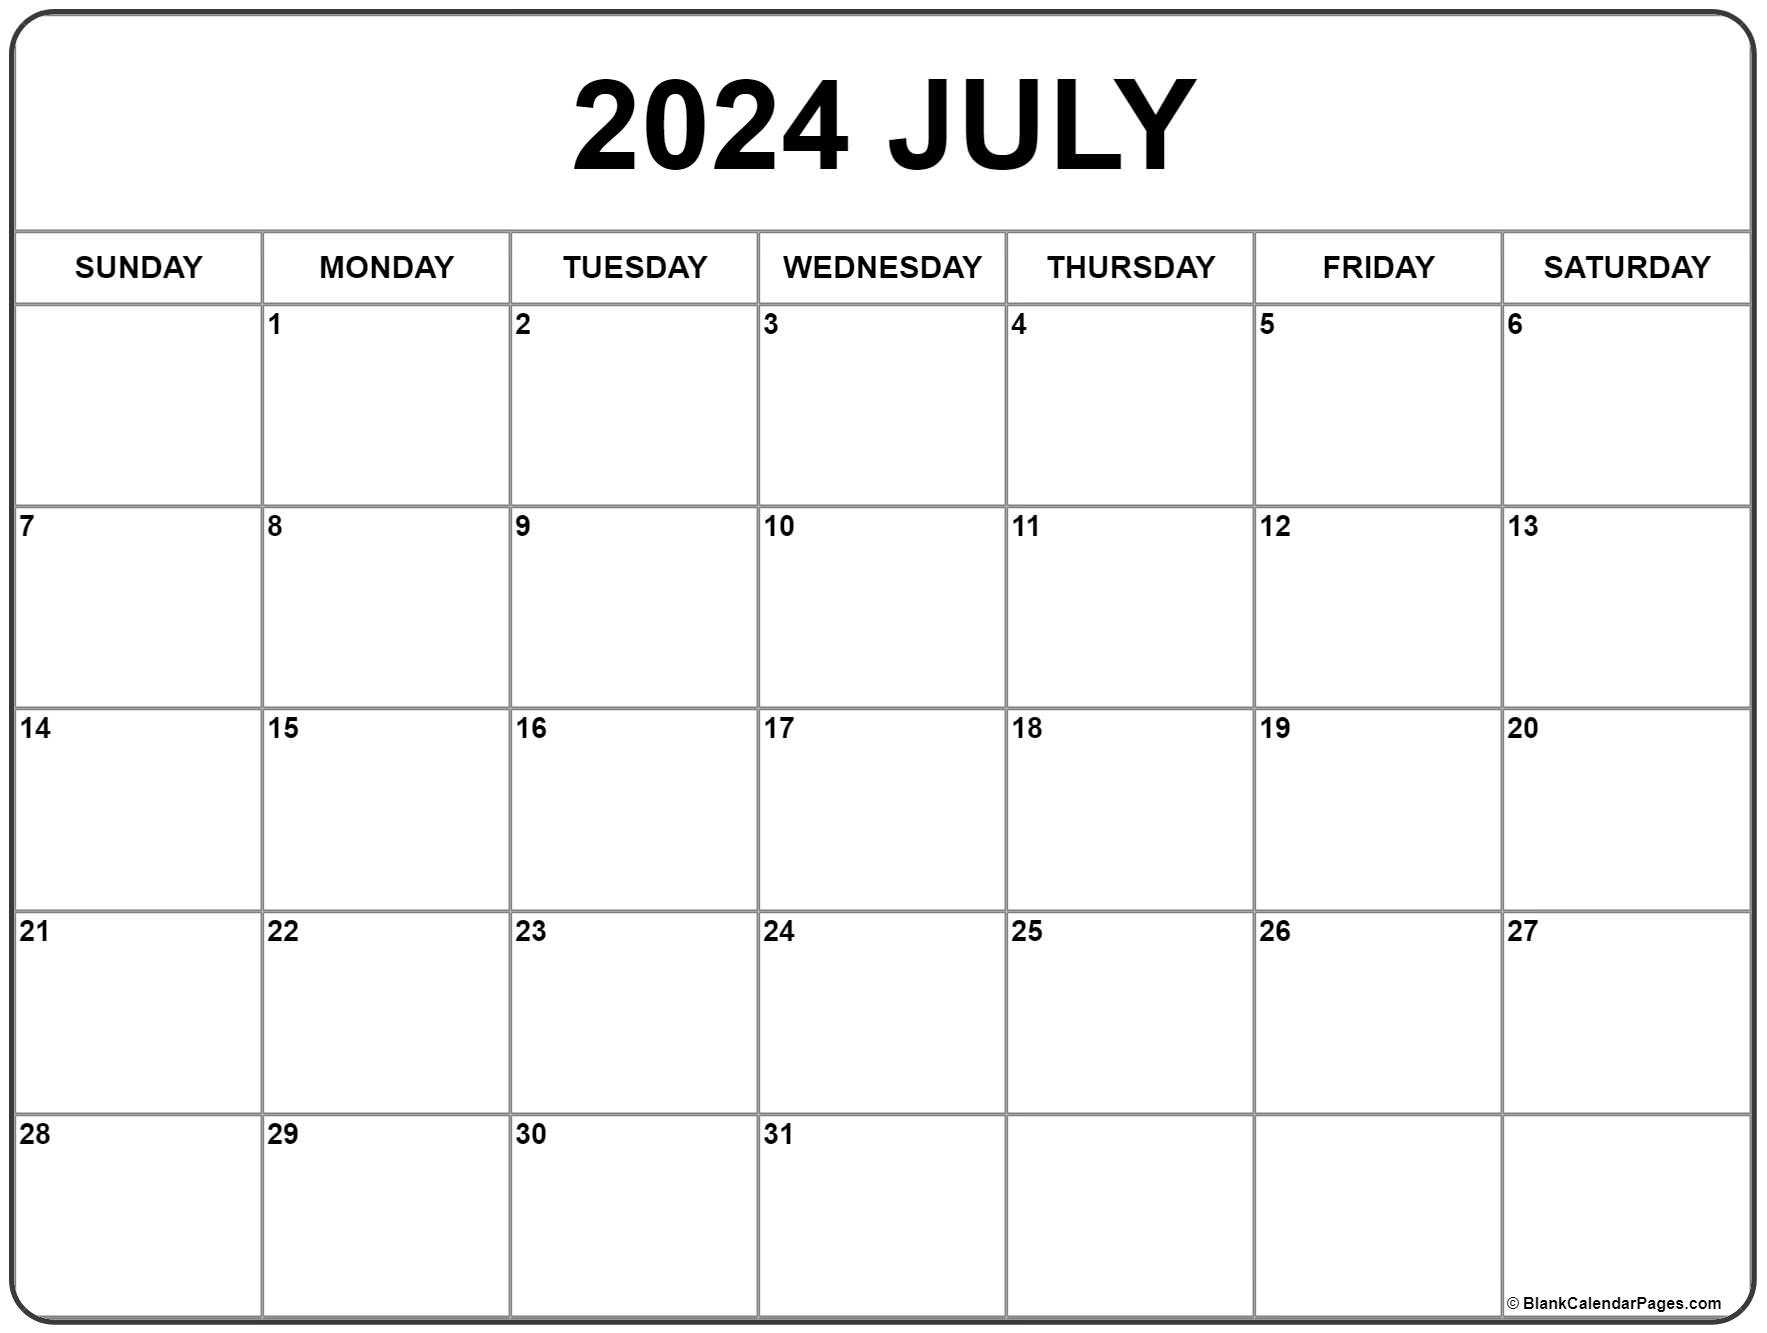 July 2024 Calendar | Free Printable Calendar inside July Free Calendar 2024